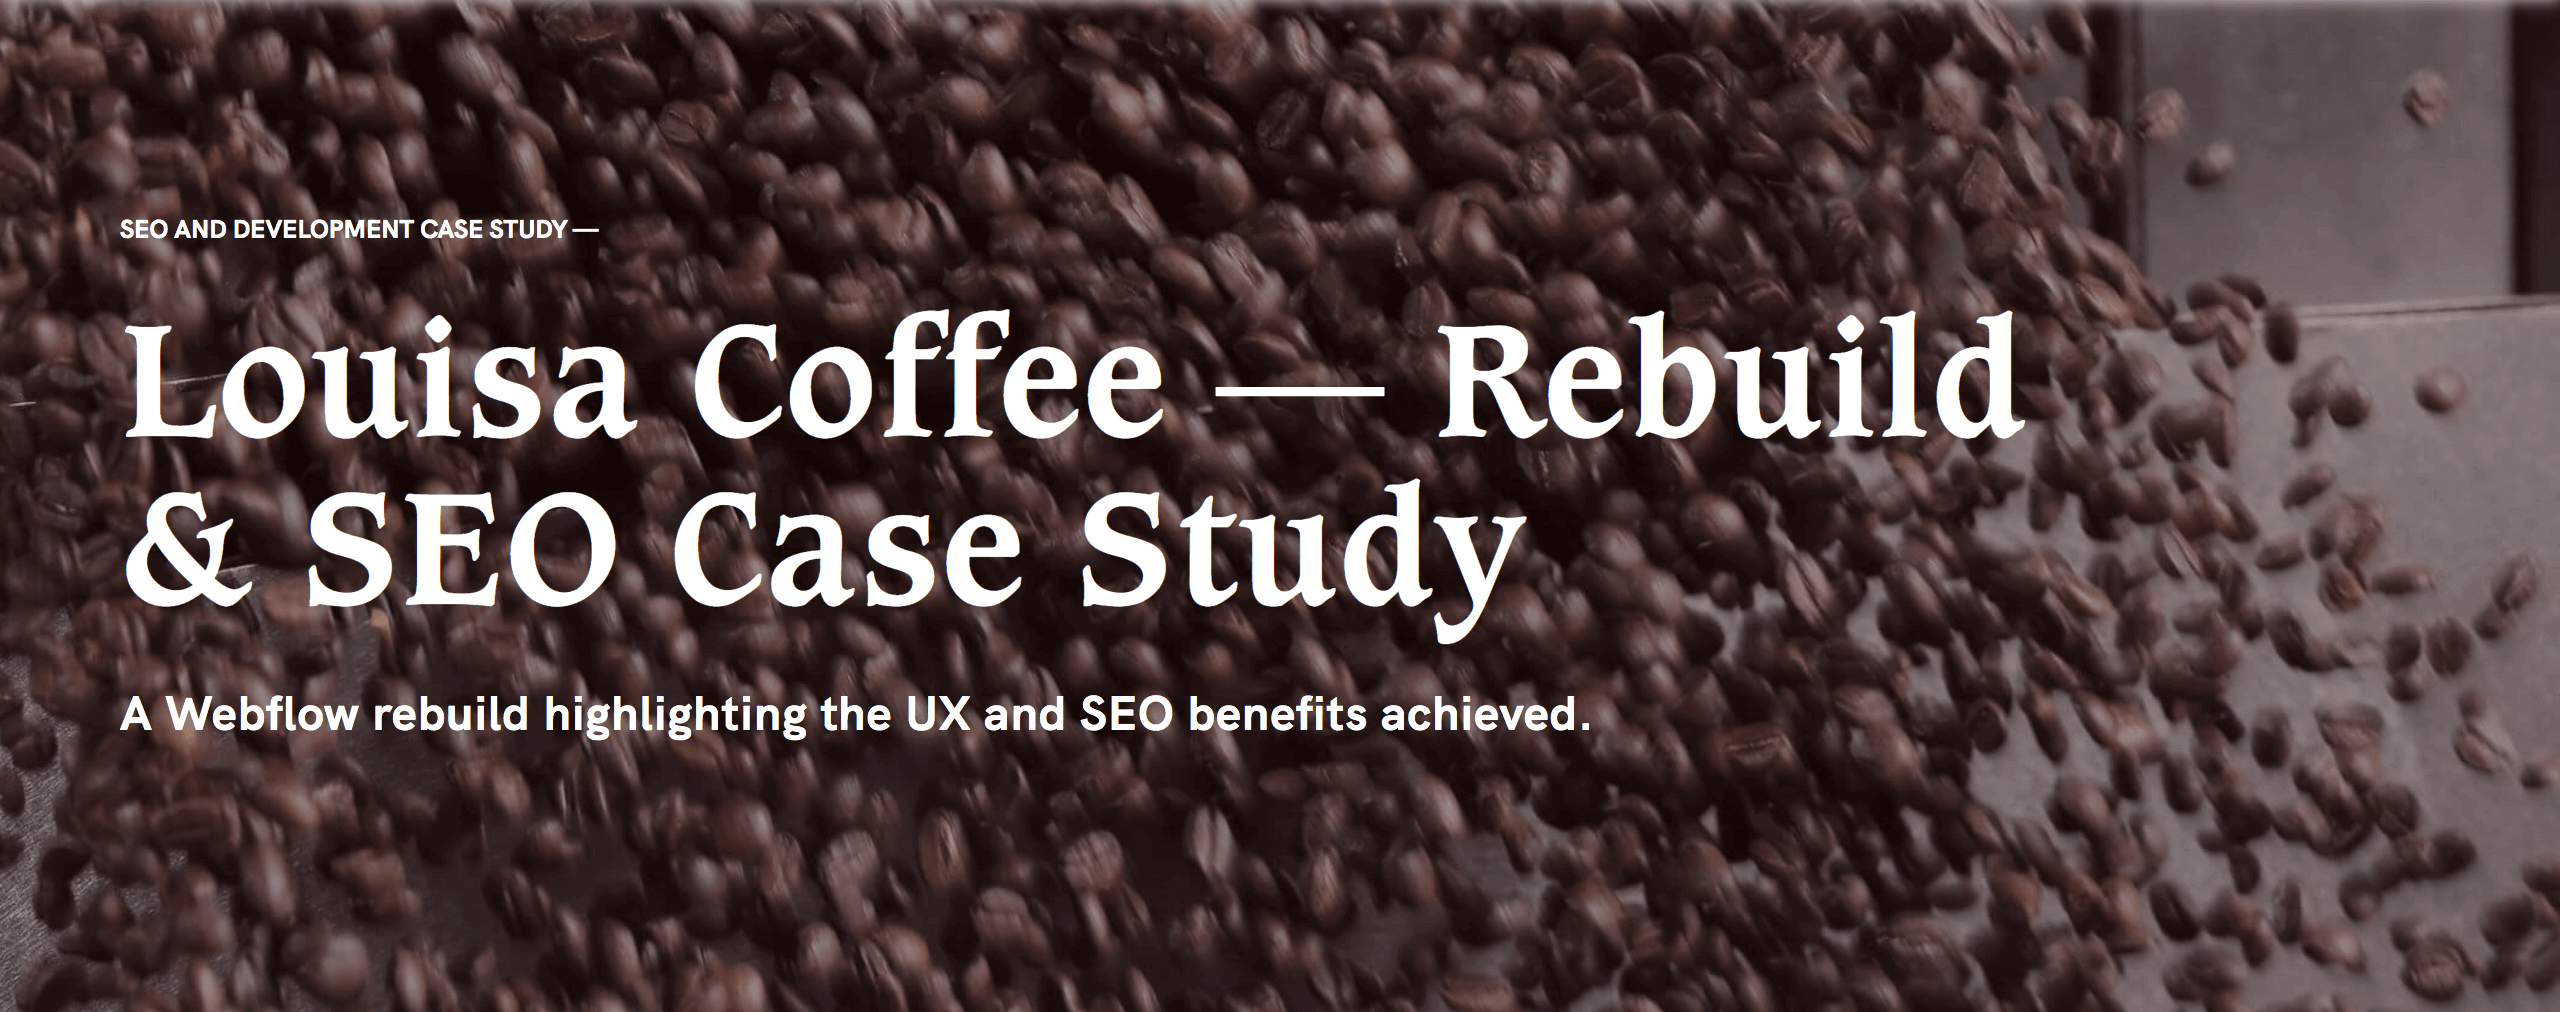 louisa coffee case study header